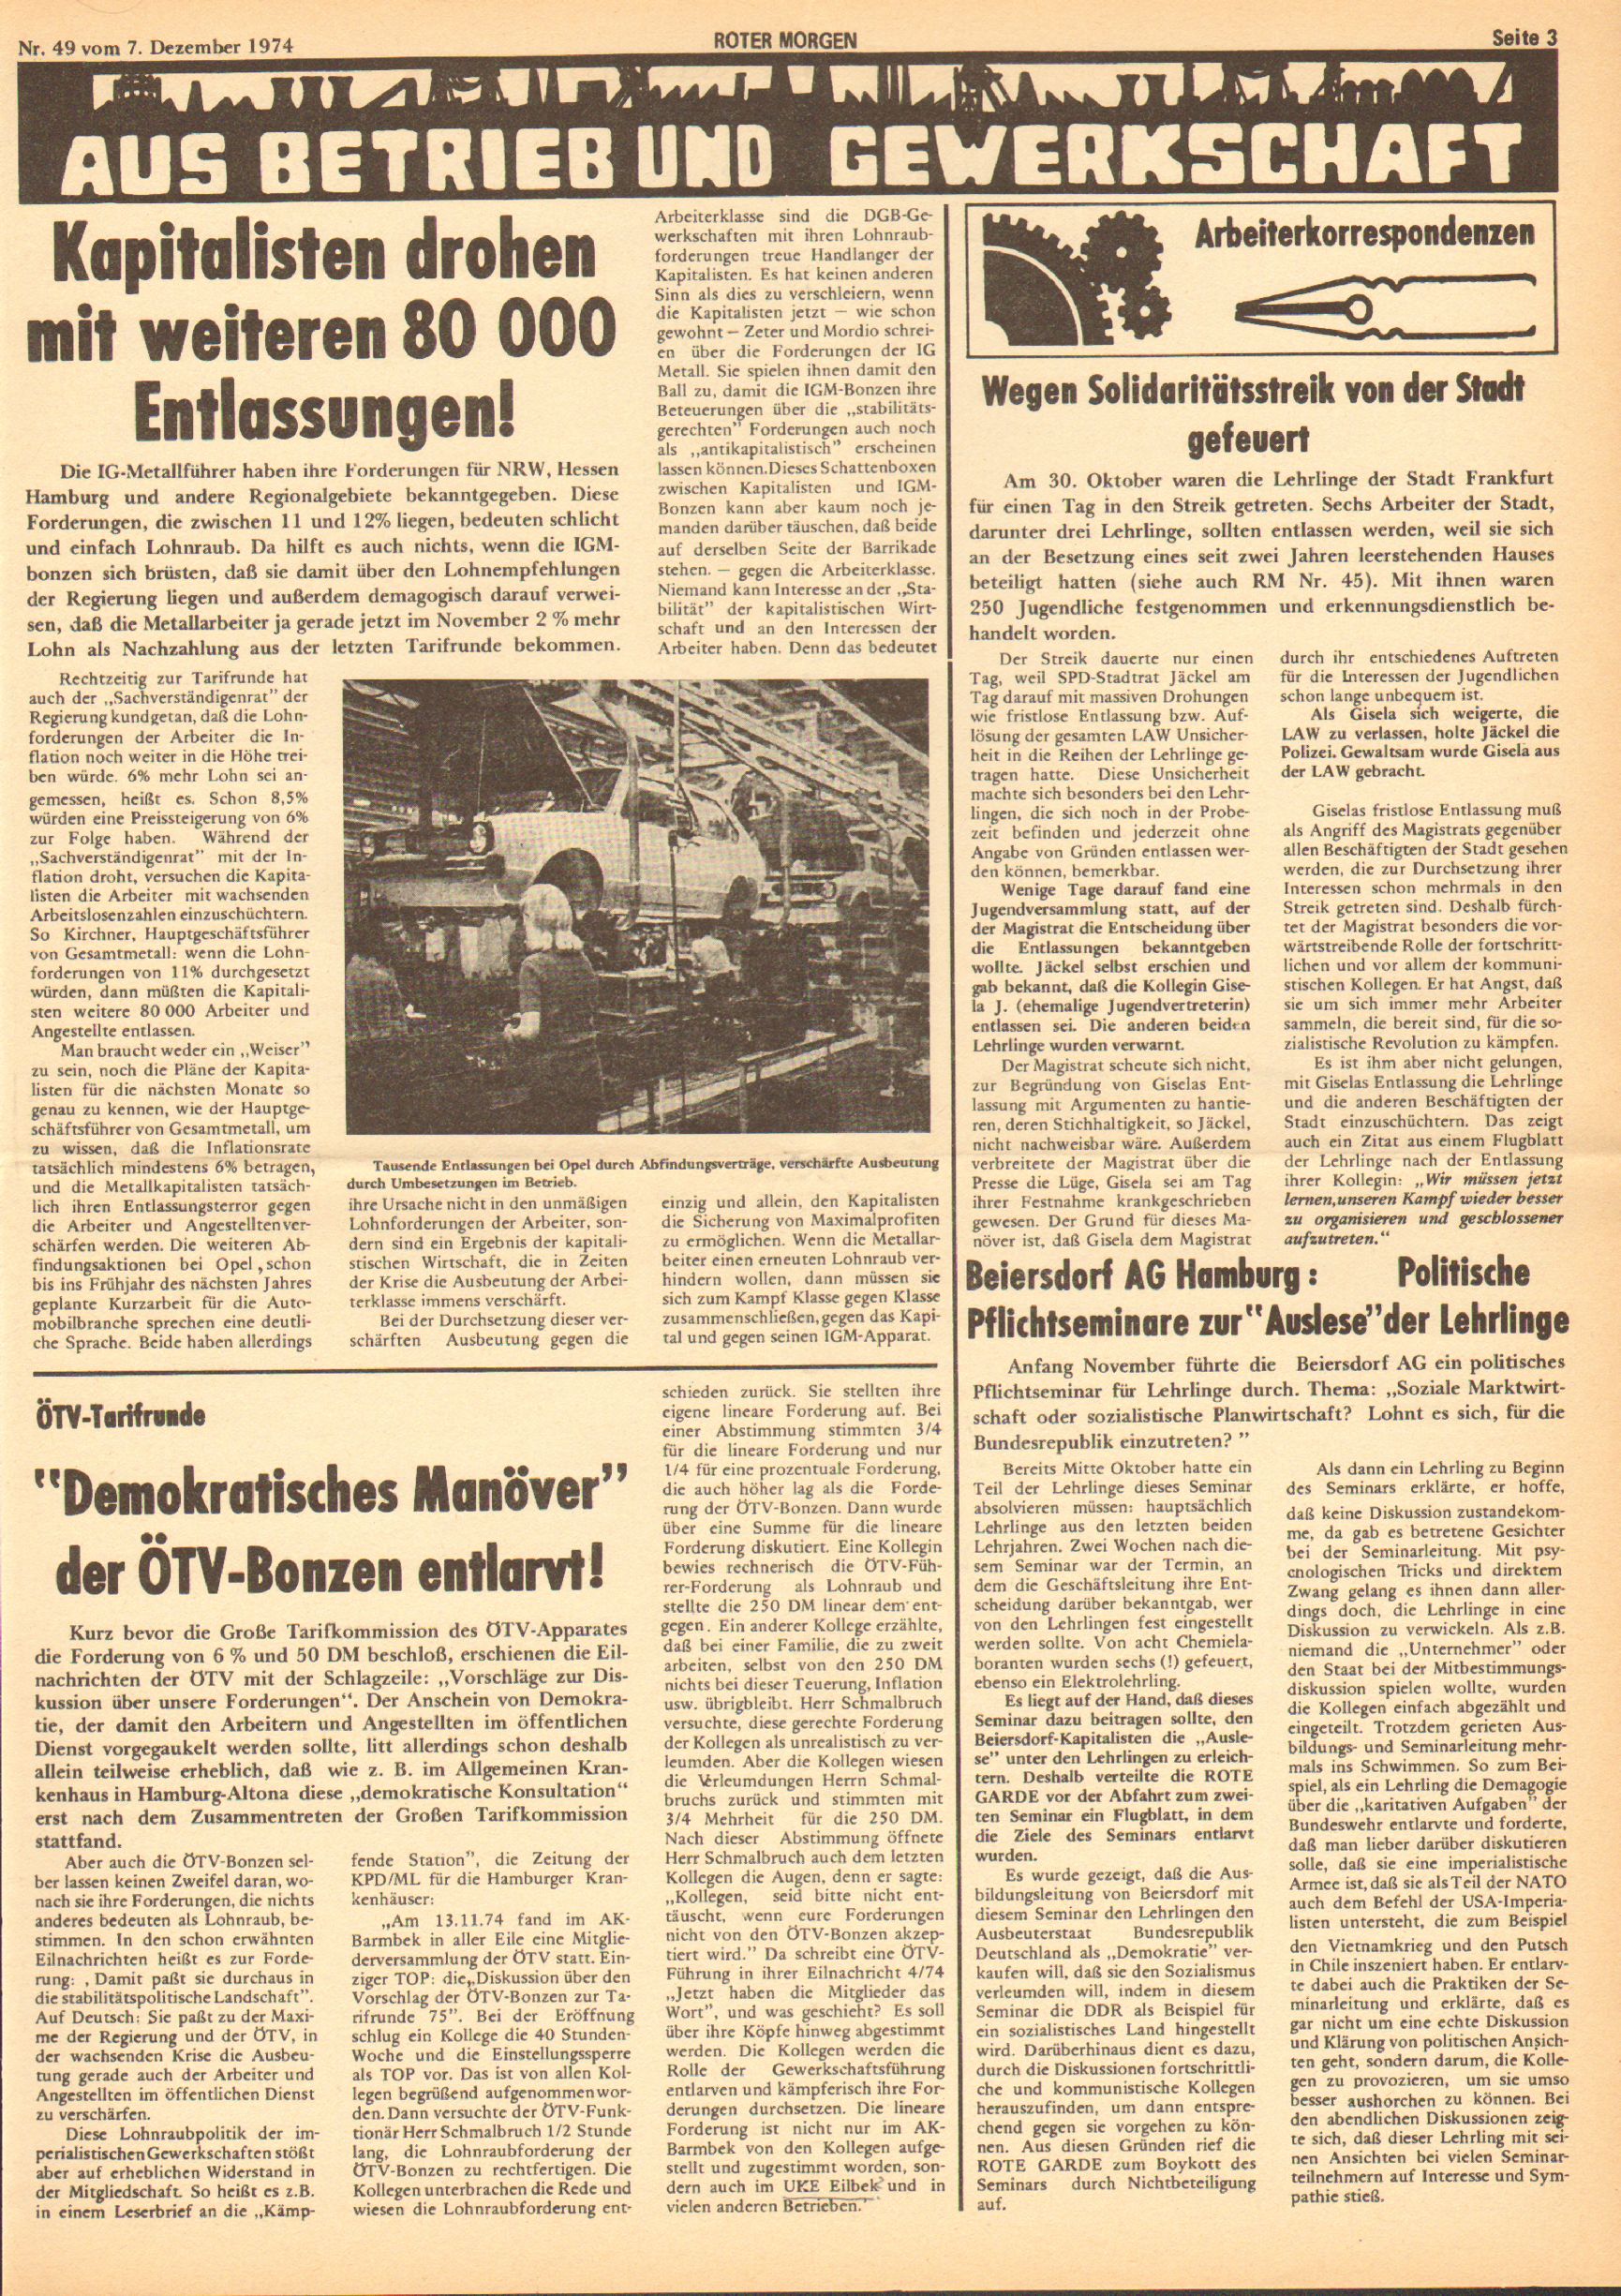 Roter Morgen, 8. Jg., 7. Dezember 1974, Nr. 49, Seite 3